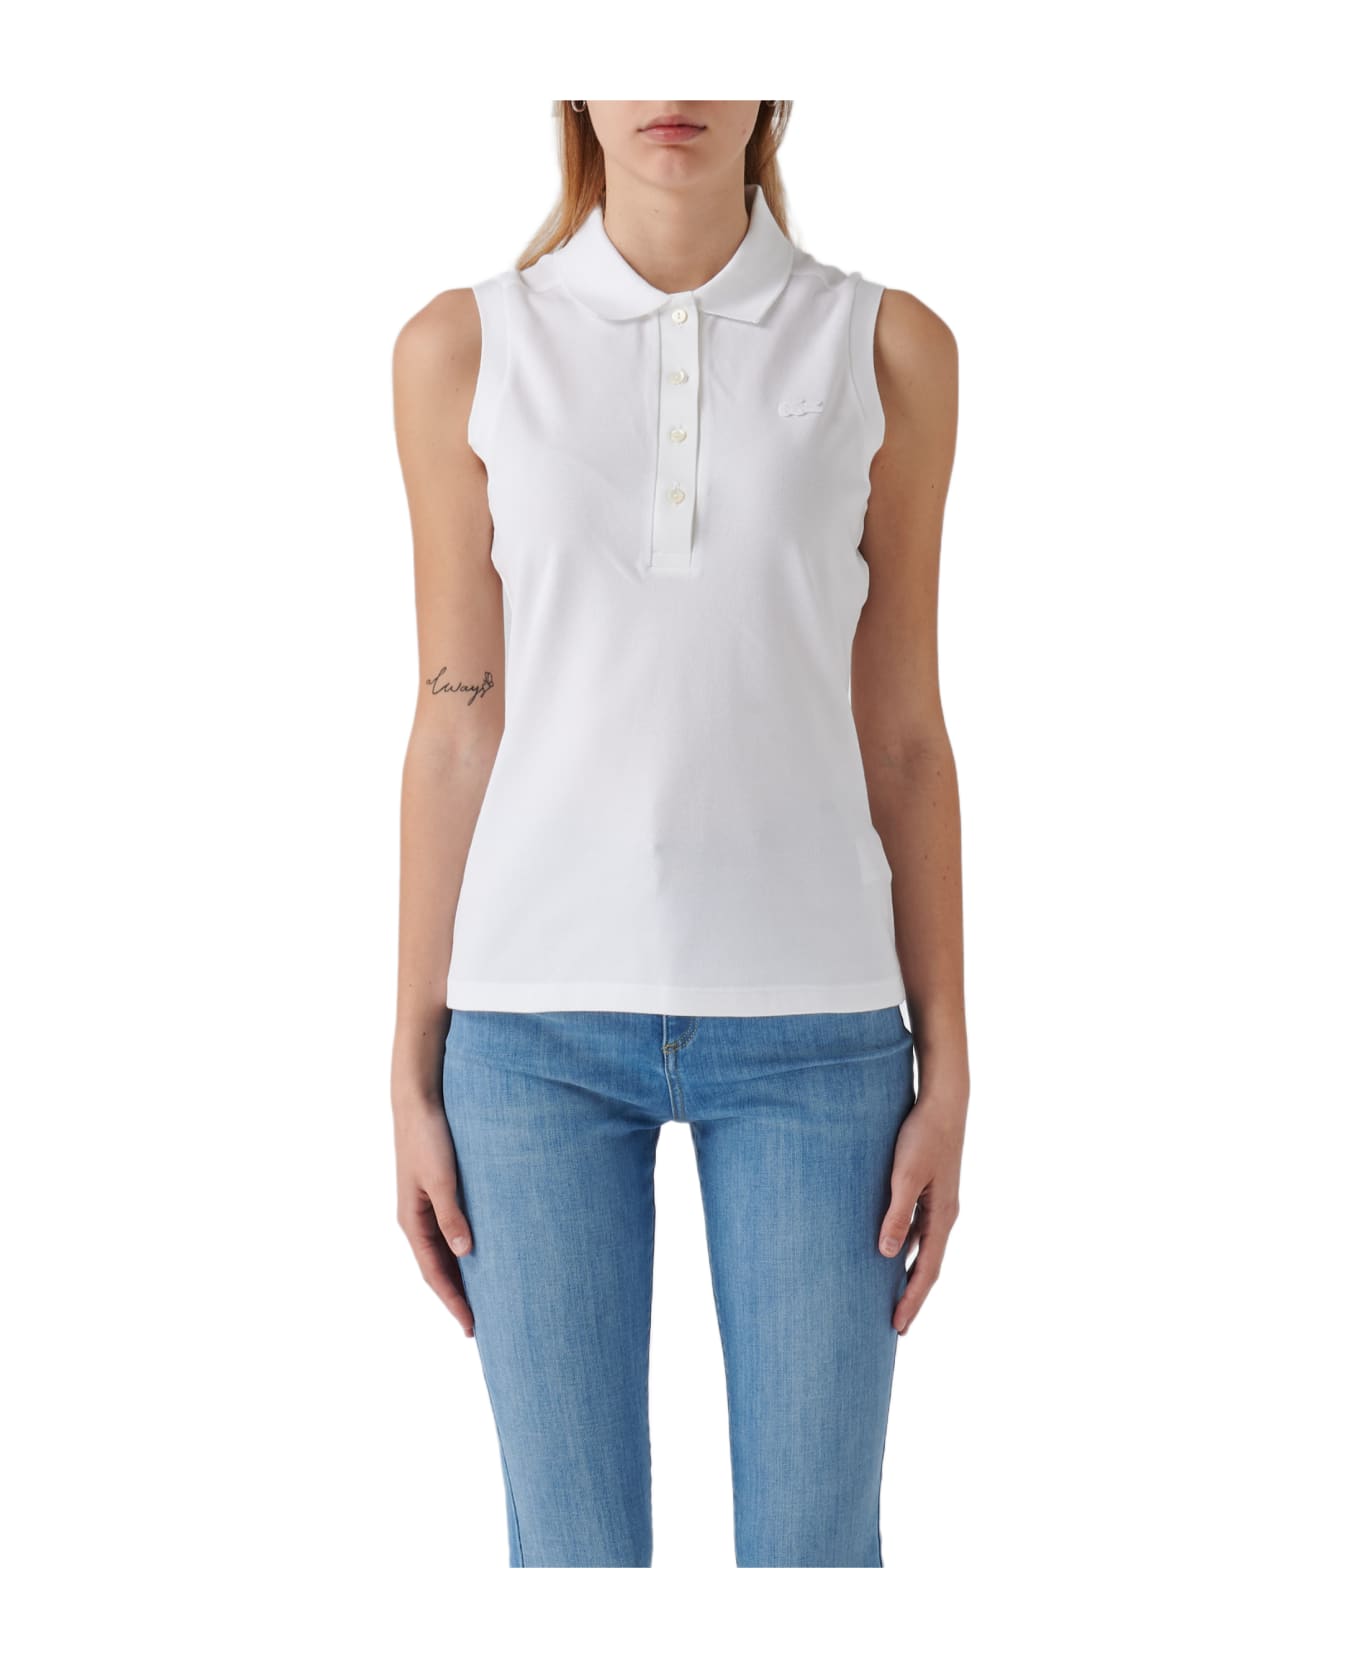 Lacoste Cotton T-shirt - BIANCO ポロシャツ